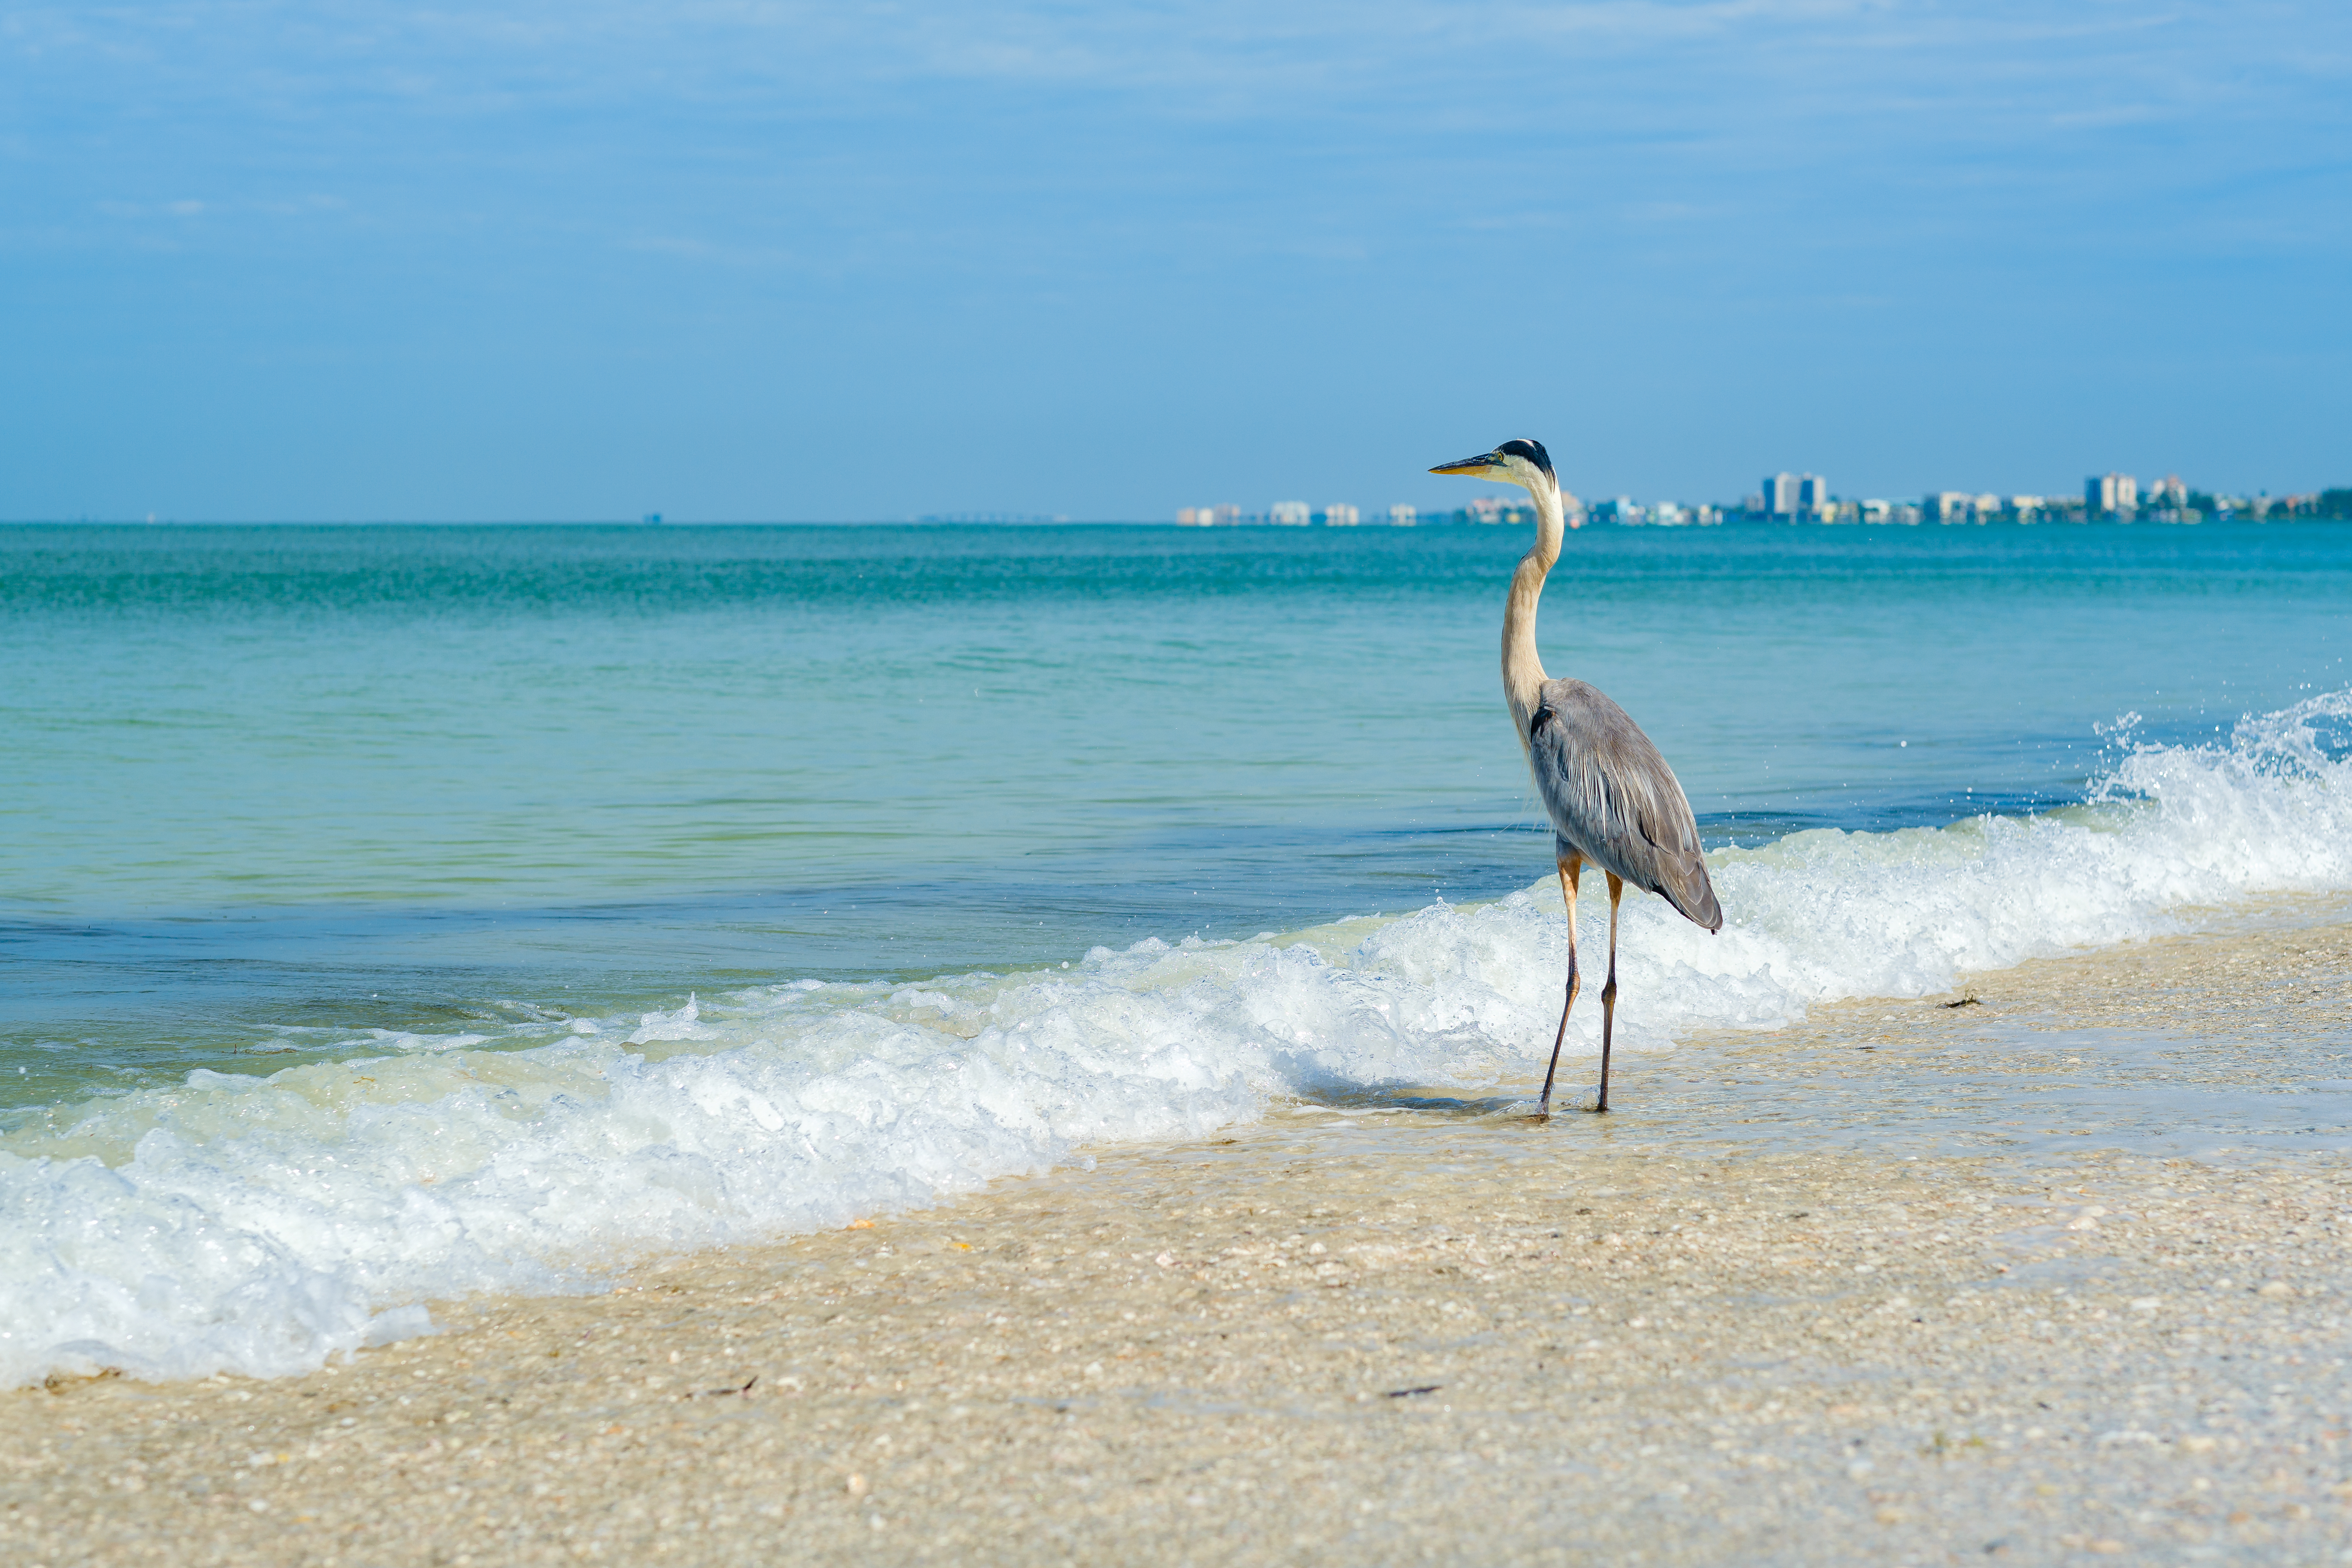 A blue heron walks along a sandy beach near emerald waters.